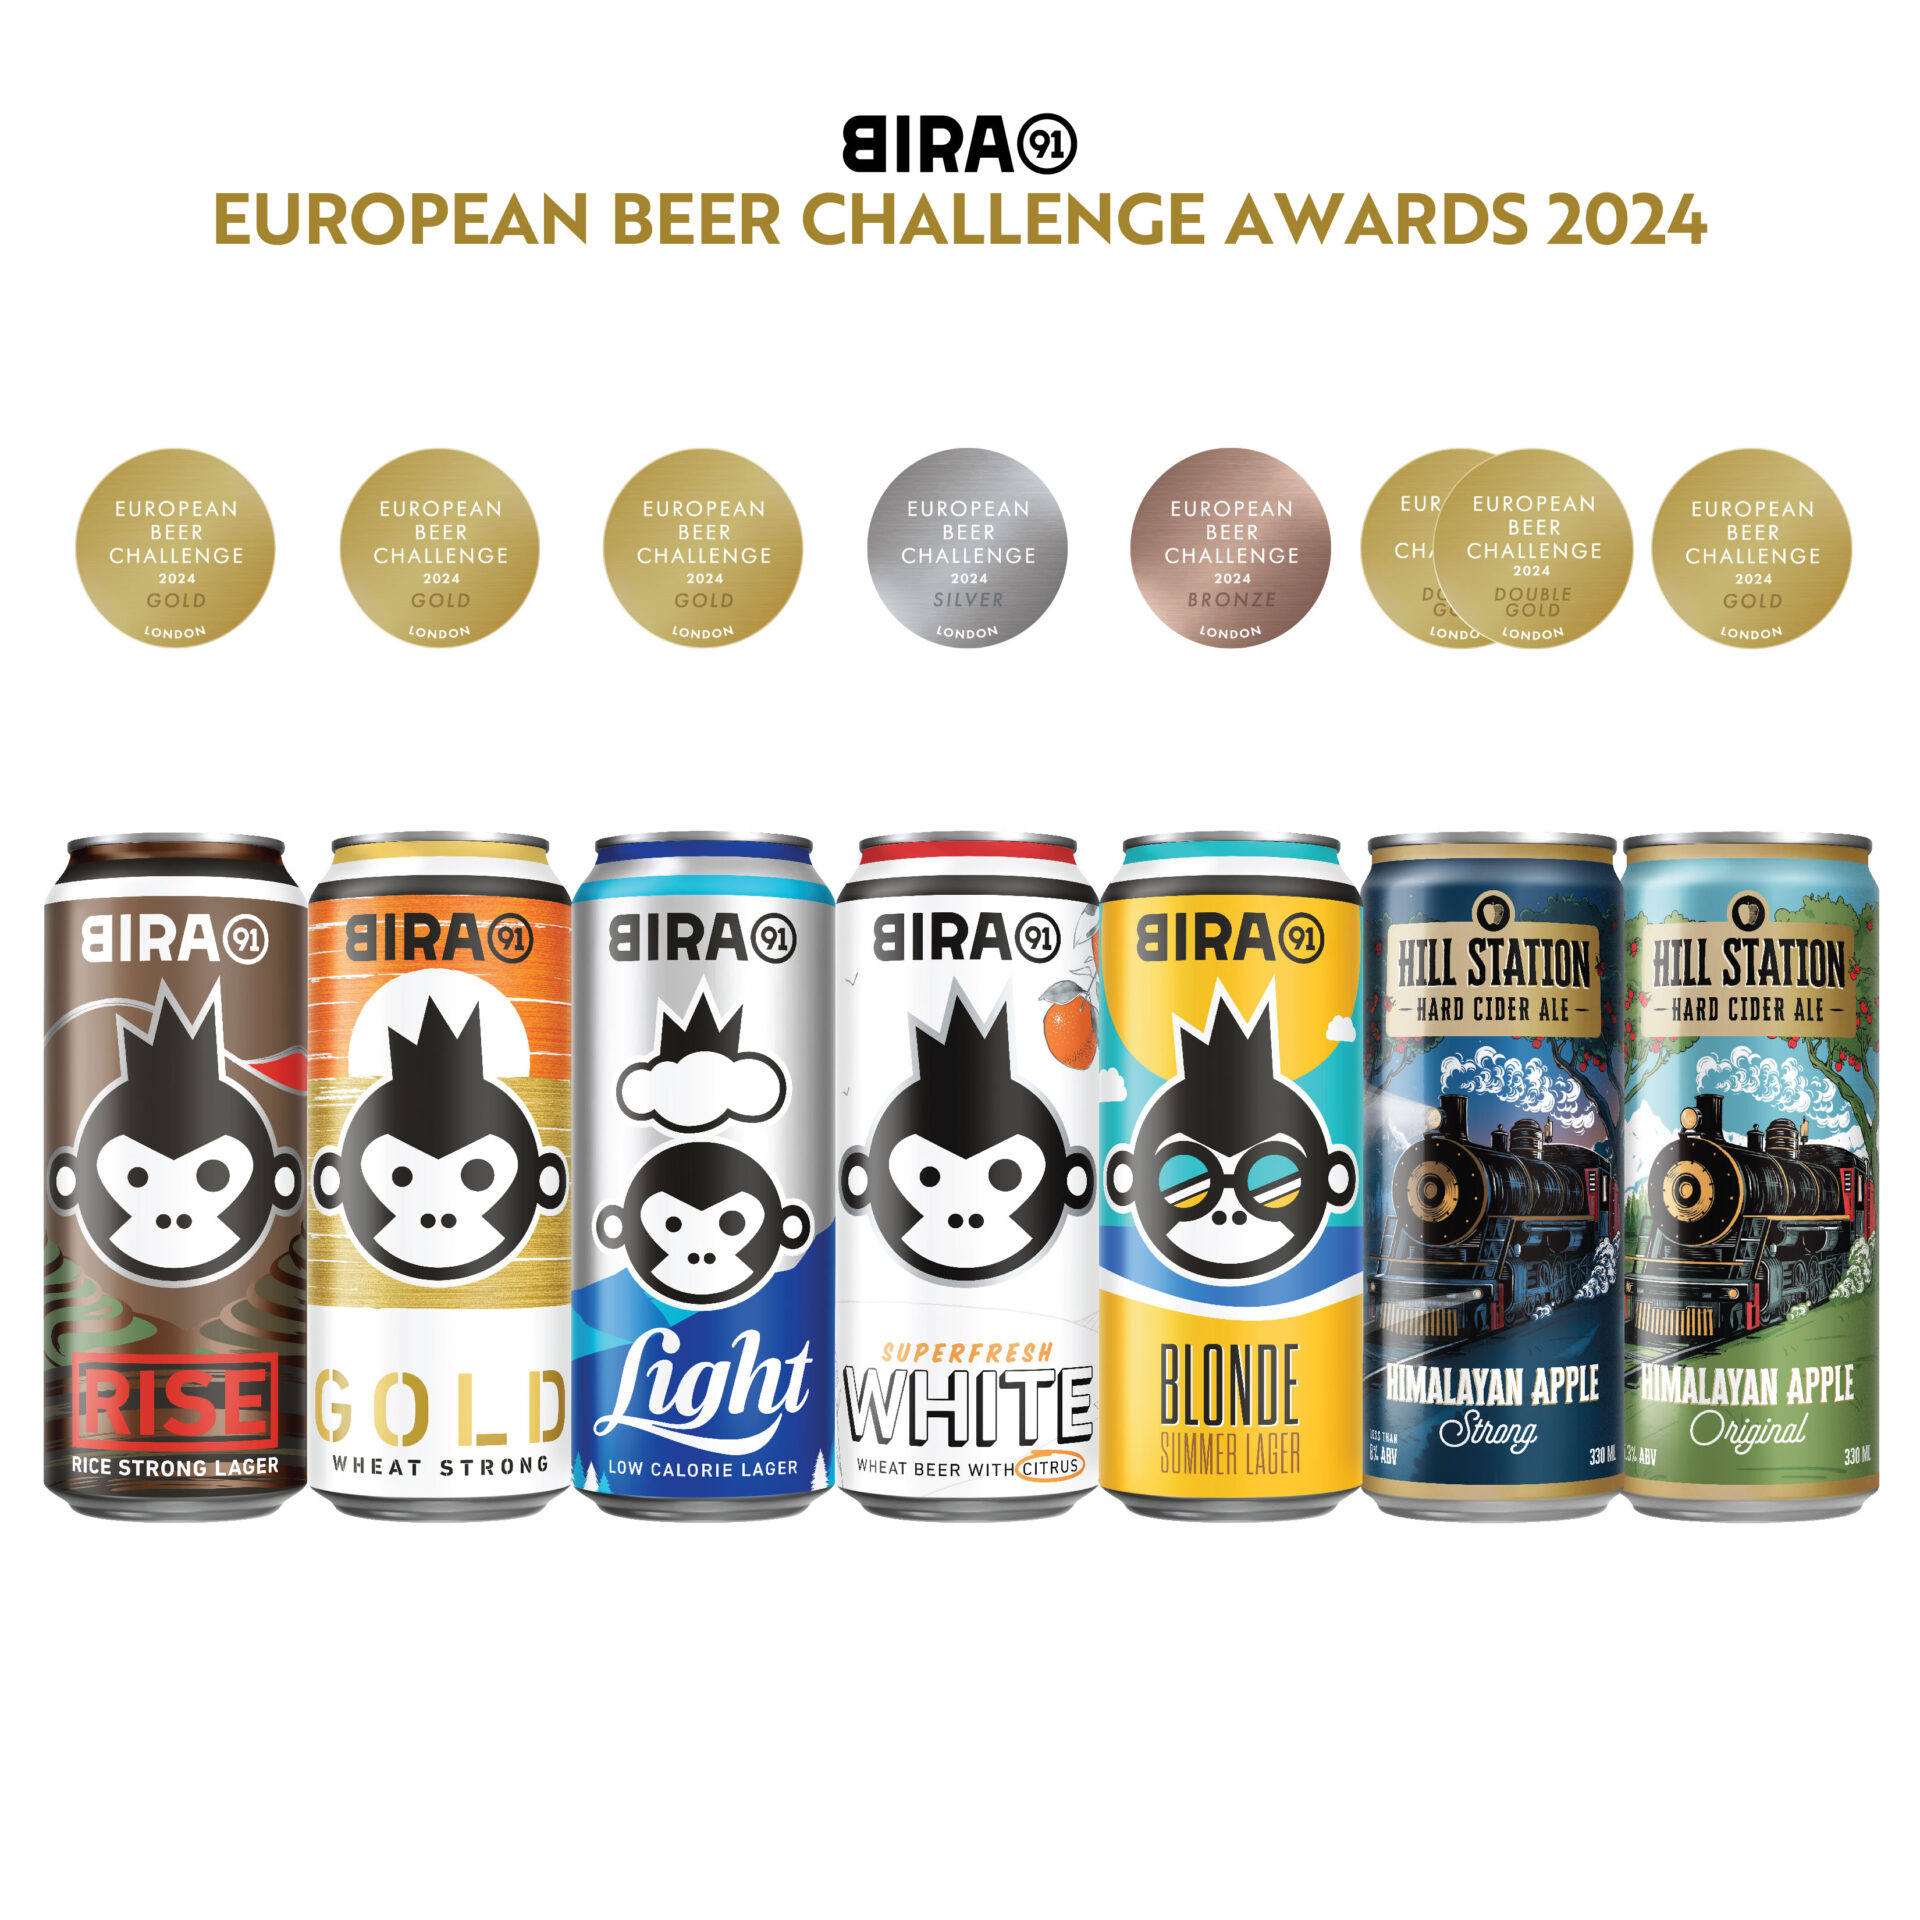 Bira 91 wins seven awards at The European Beer Challenge 2024